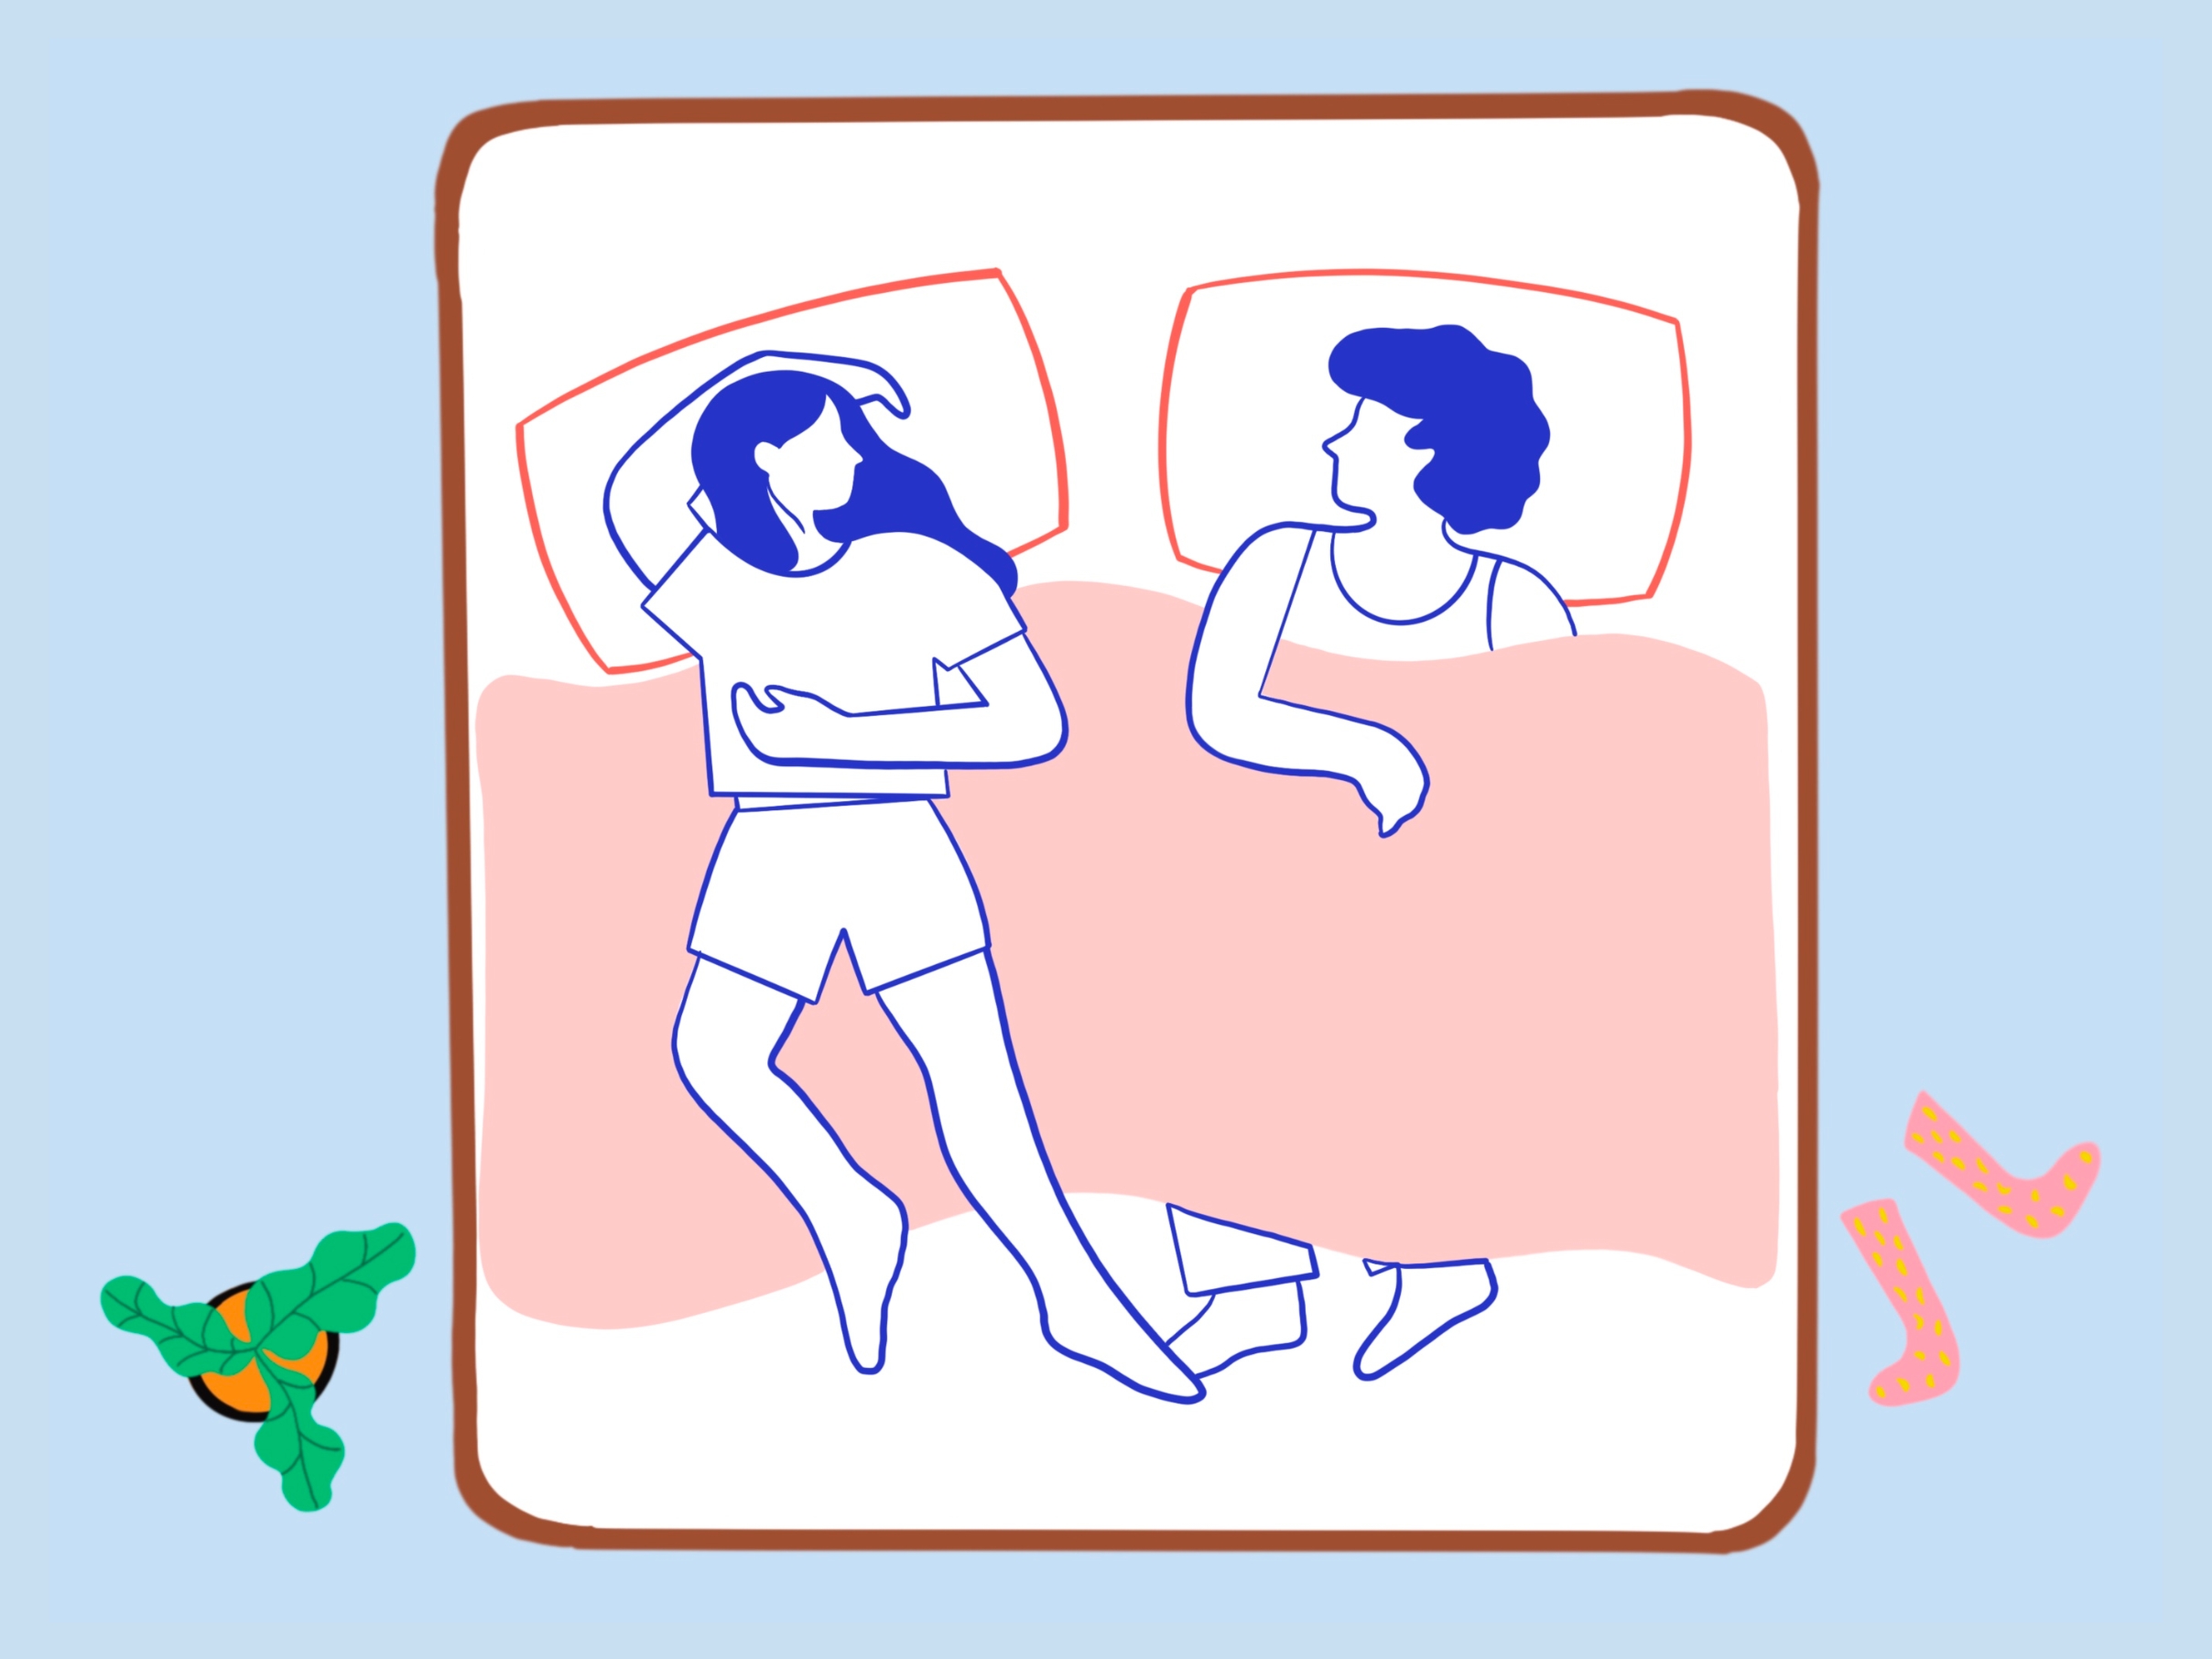 Romantic Sleeping Poses Illustration